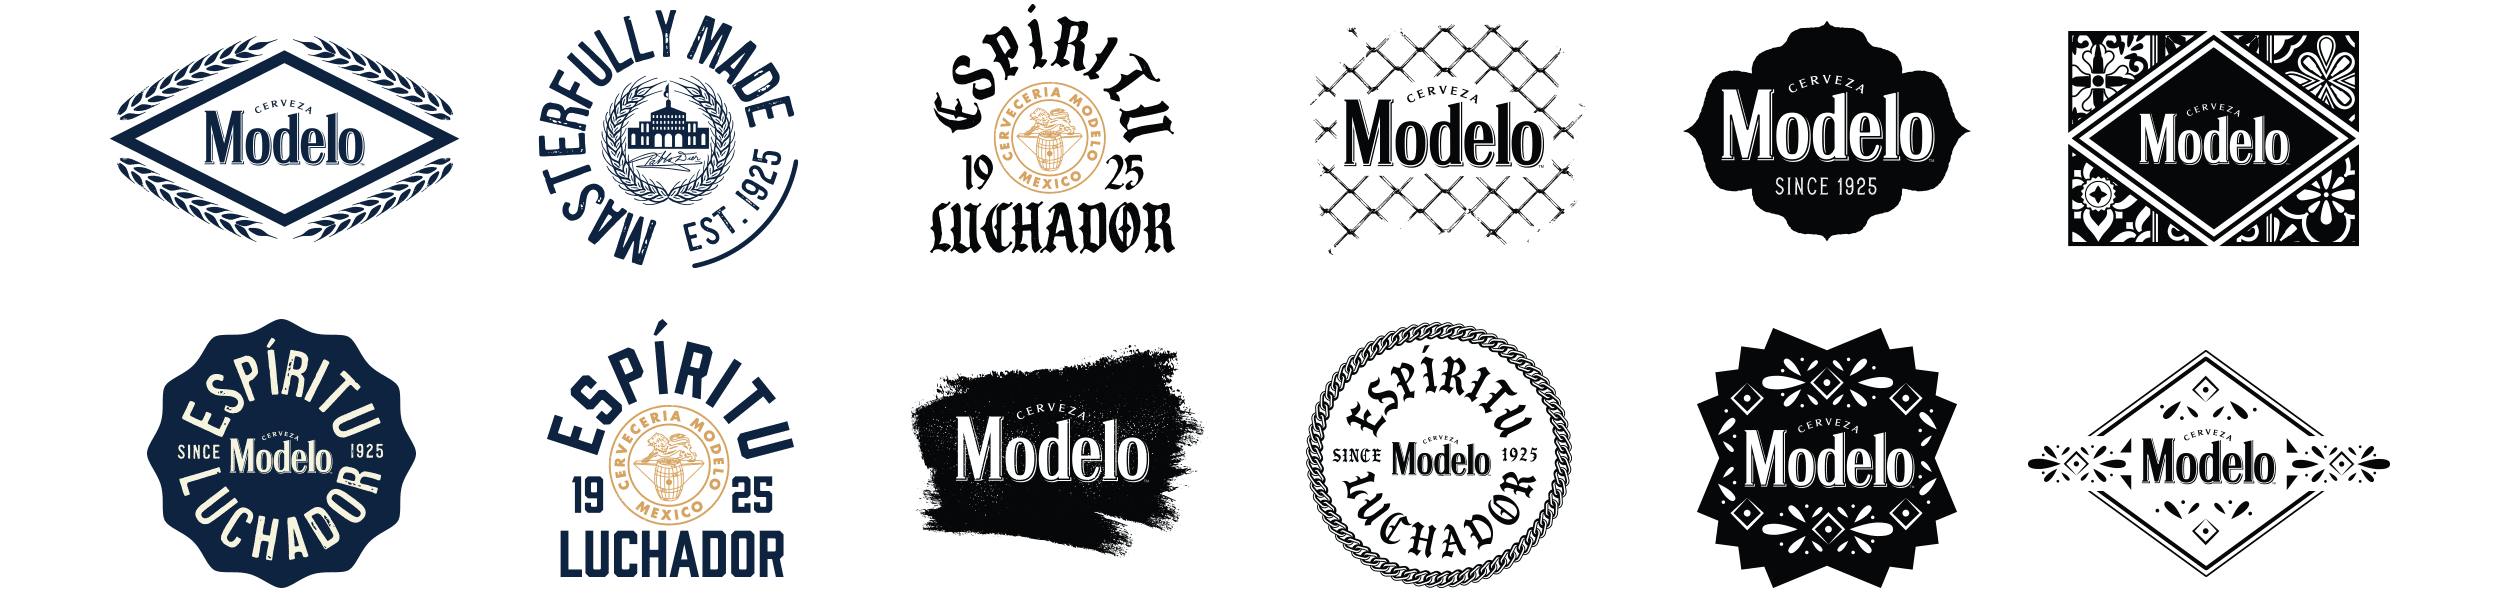 Modelo Packaging Guidelines Logos